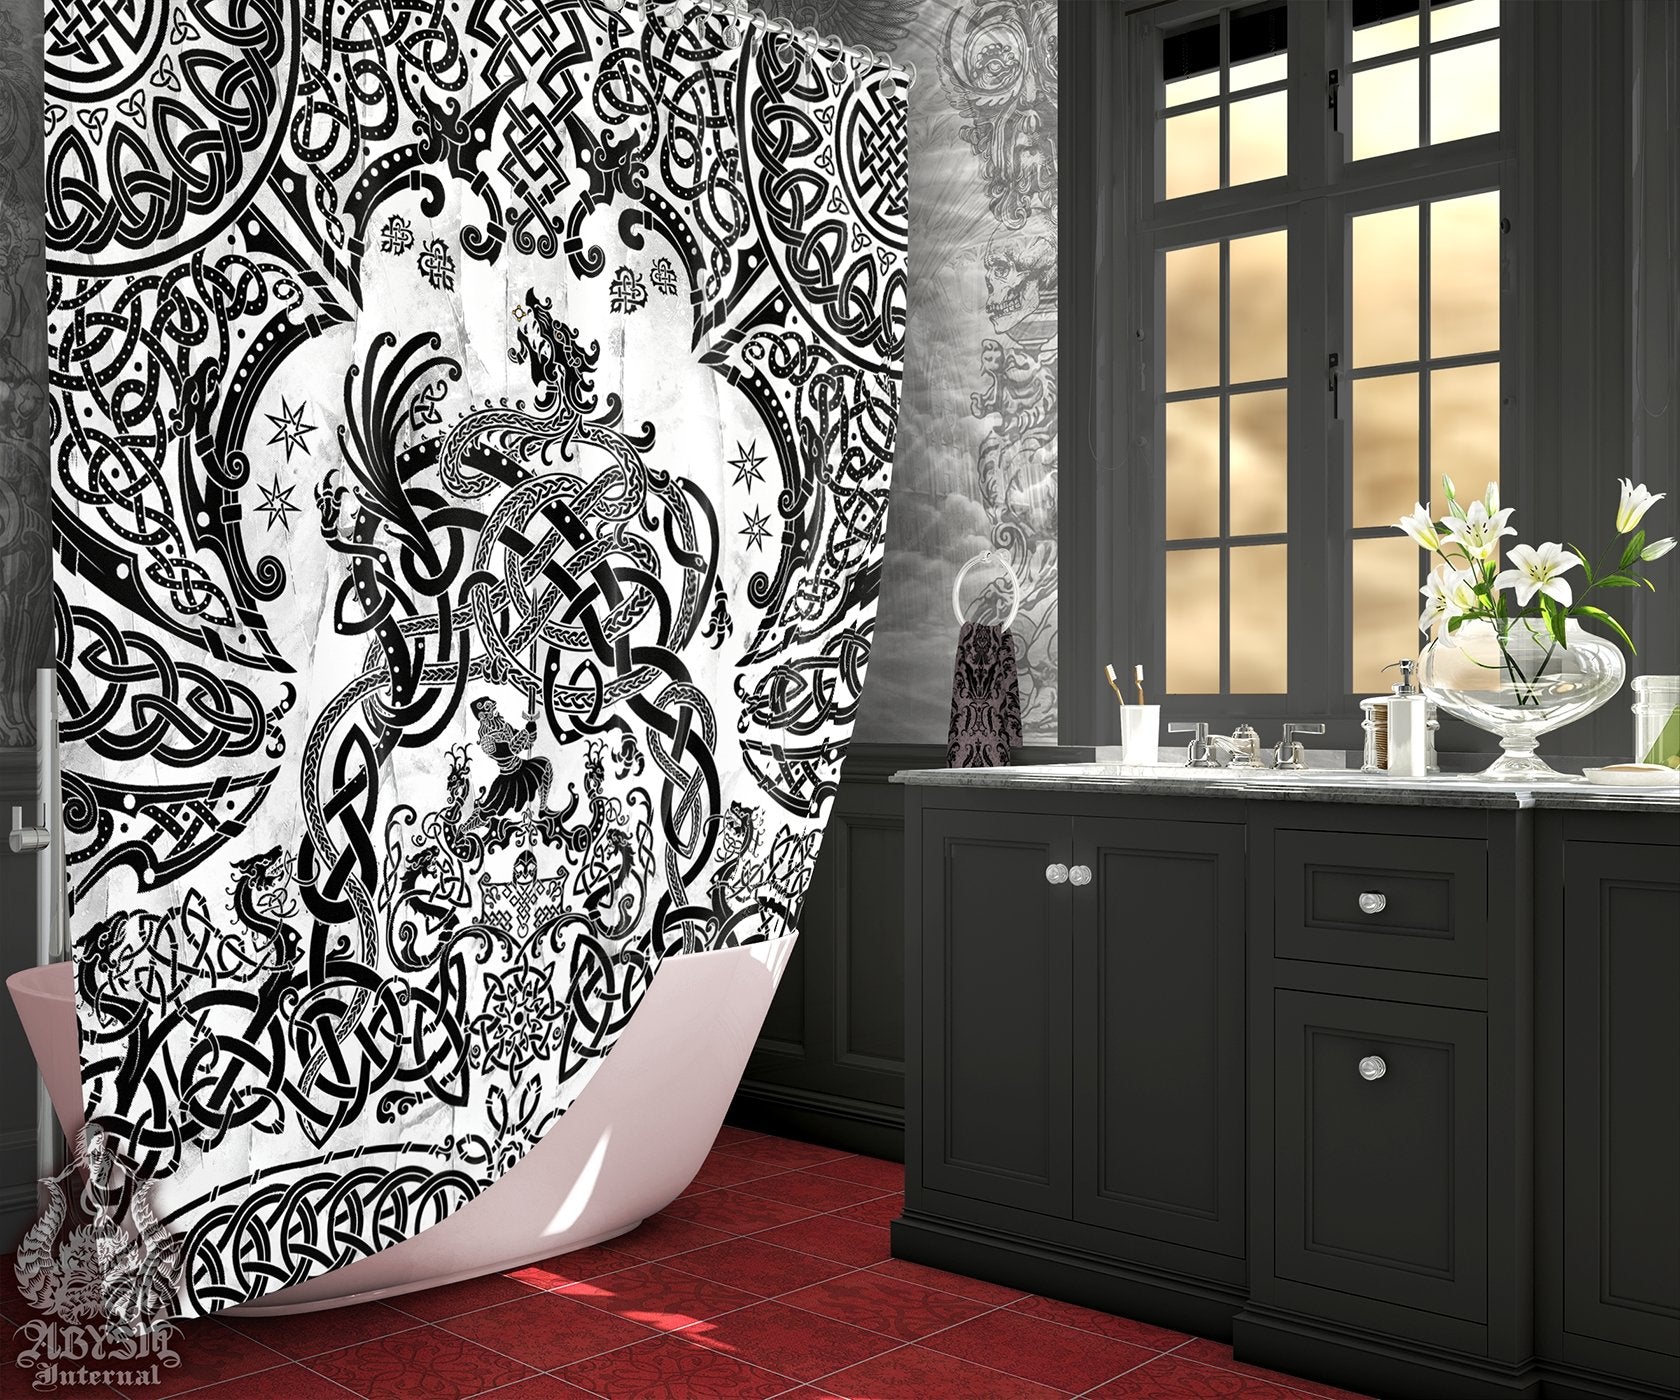 Viking Shower Curtain, Bathroom Decor, Nordic & Norse Art, Dragon Fafnir - Black & White - Abysm Internal